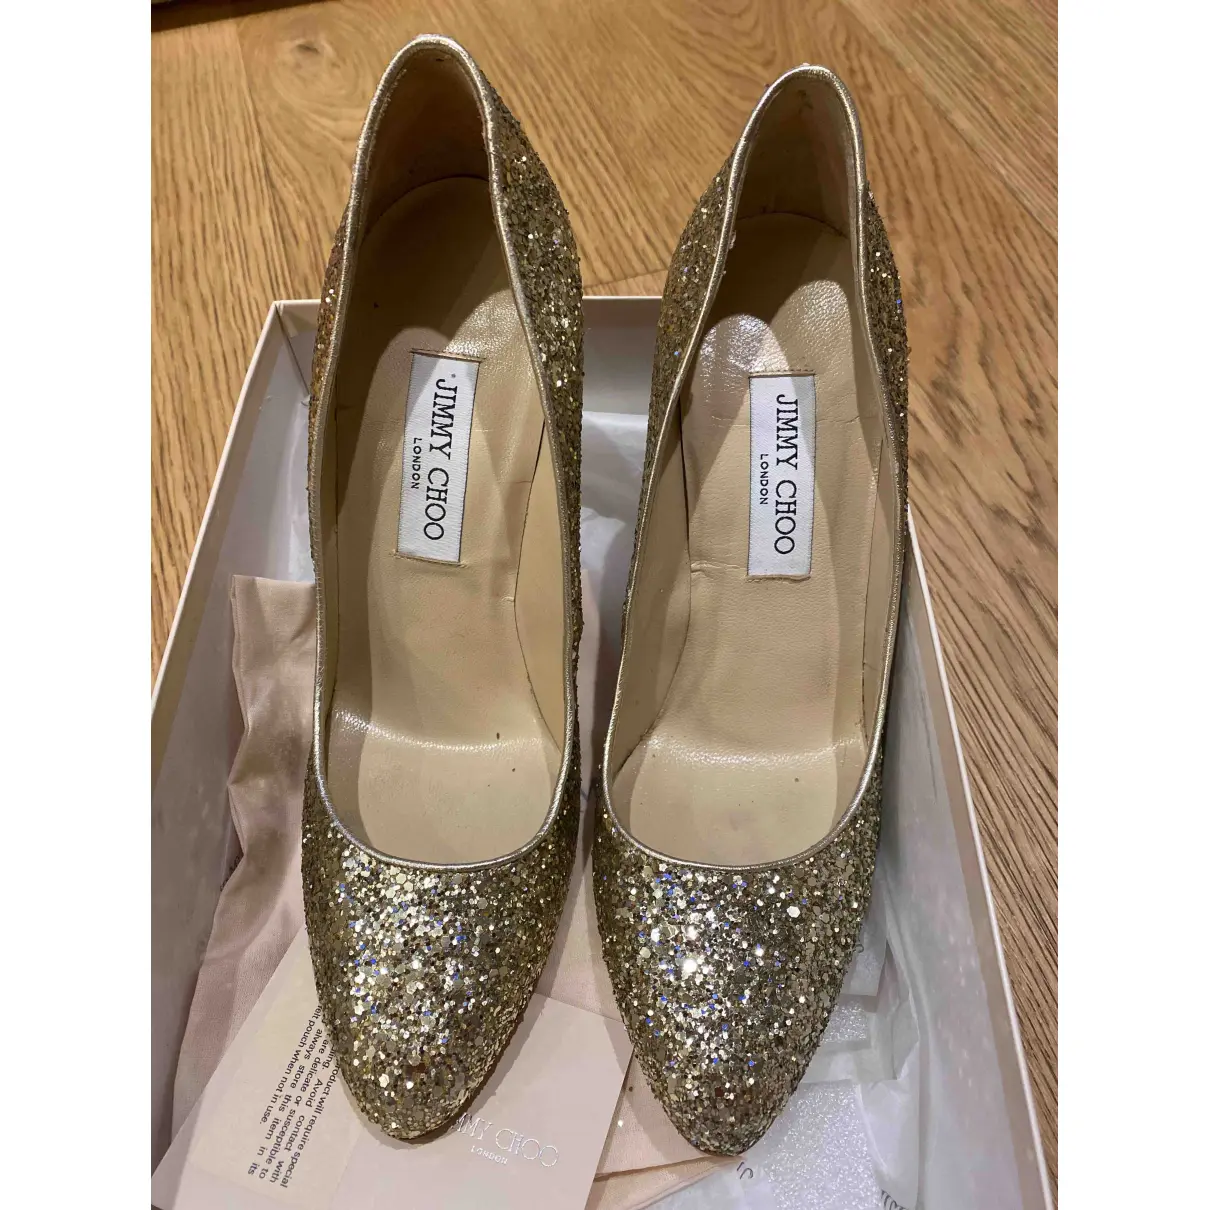 Buy Jimmy Choo Esme glitter heels online